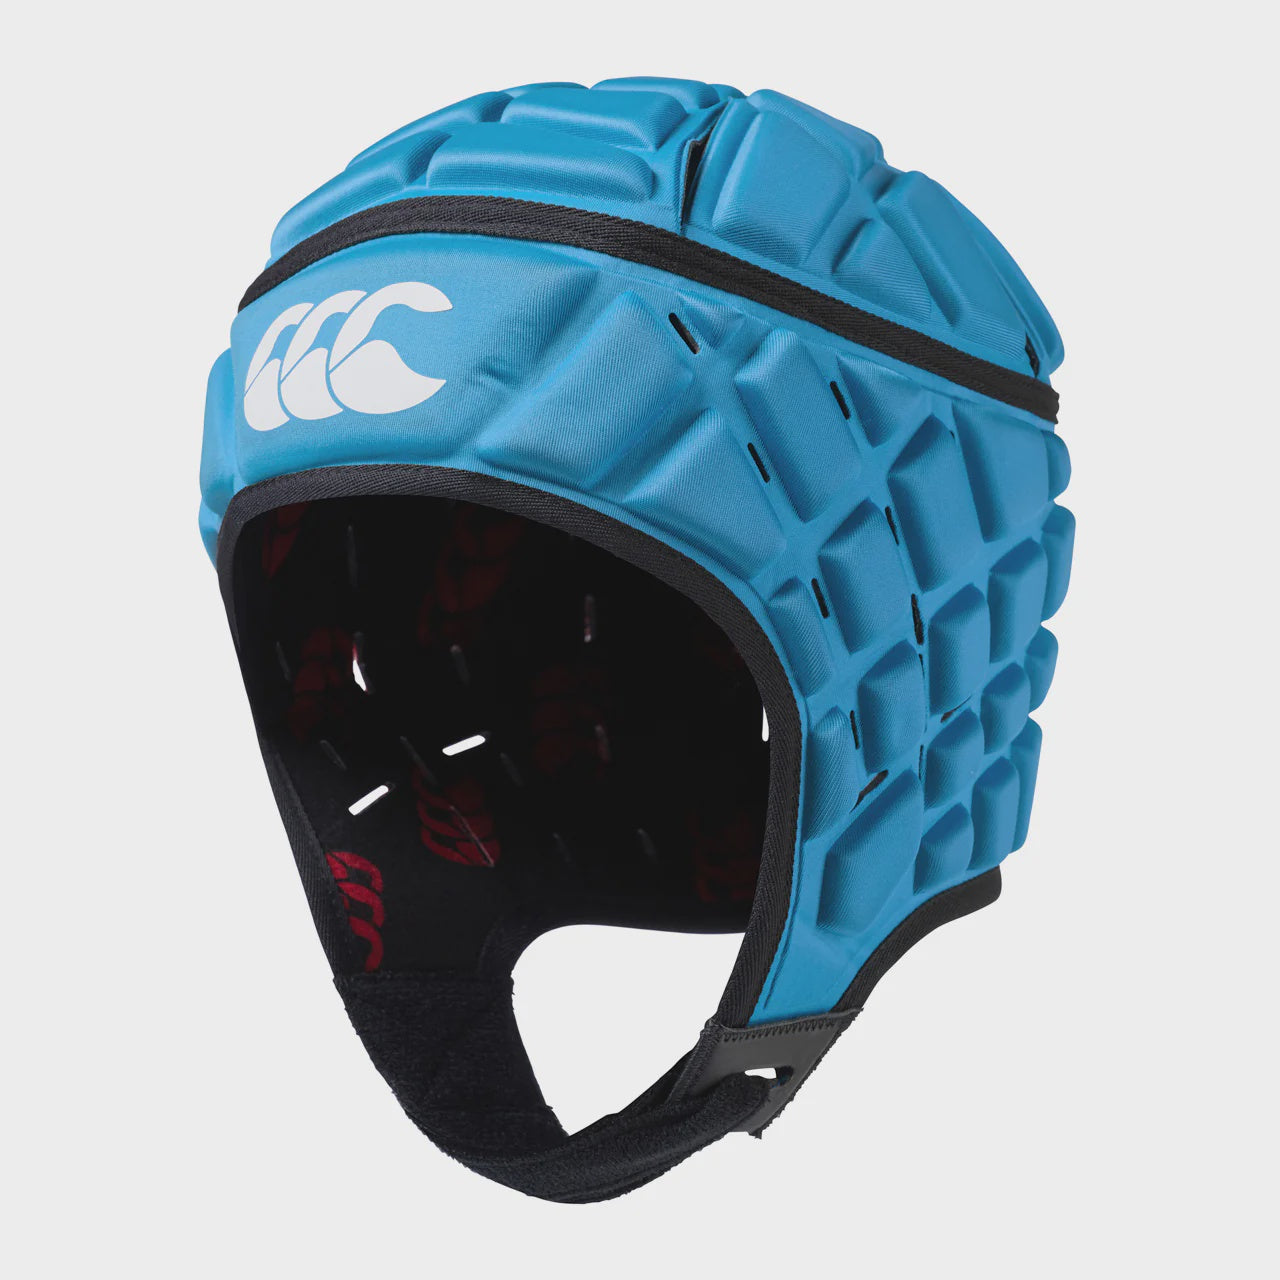 CCC Raze Headguard - blue